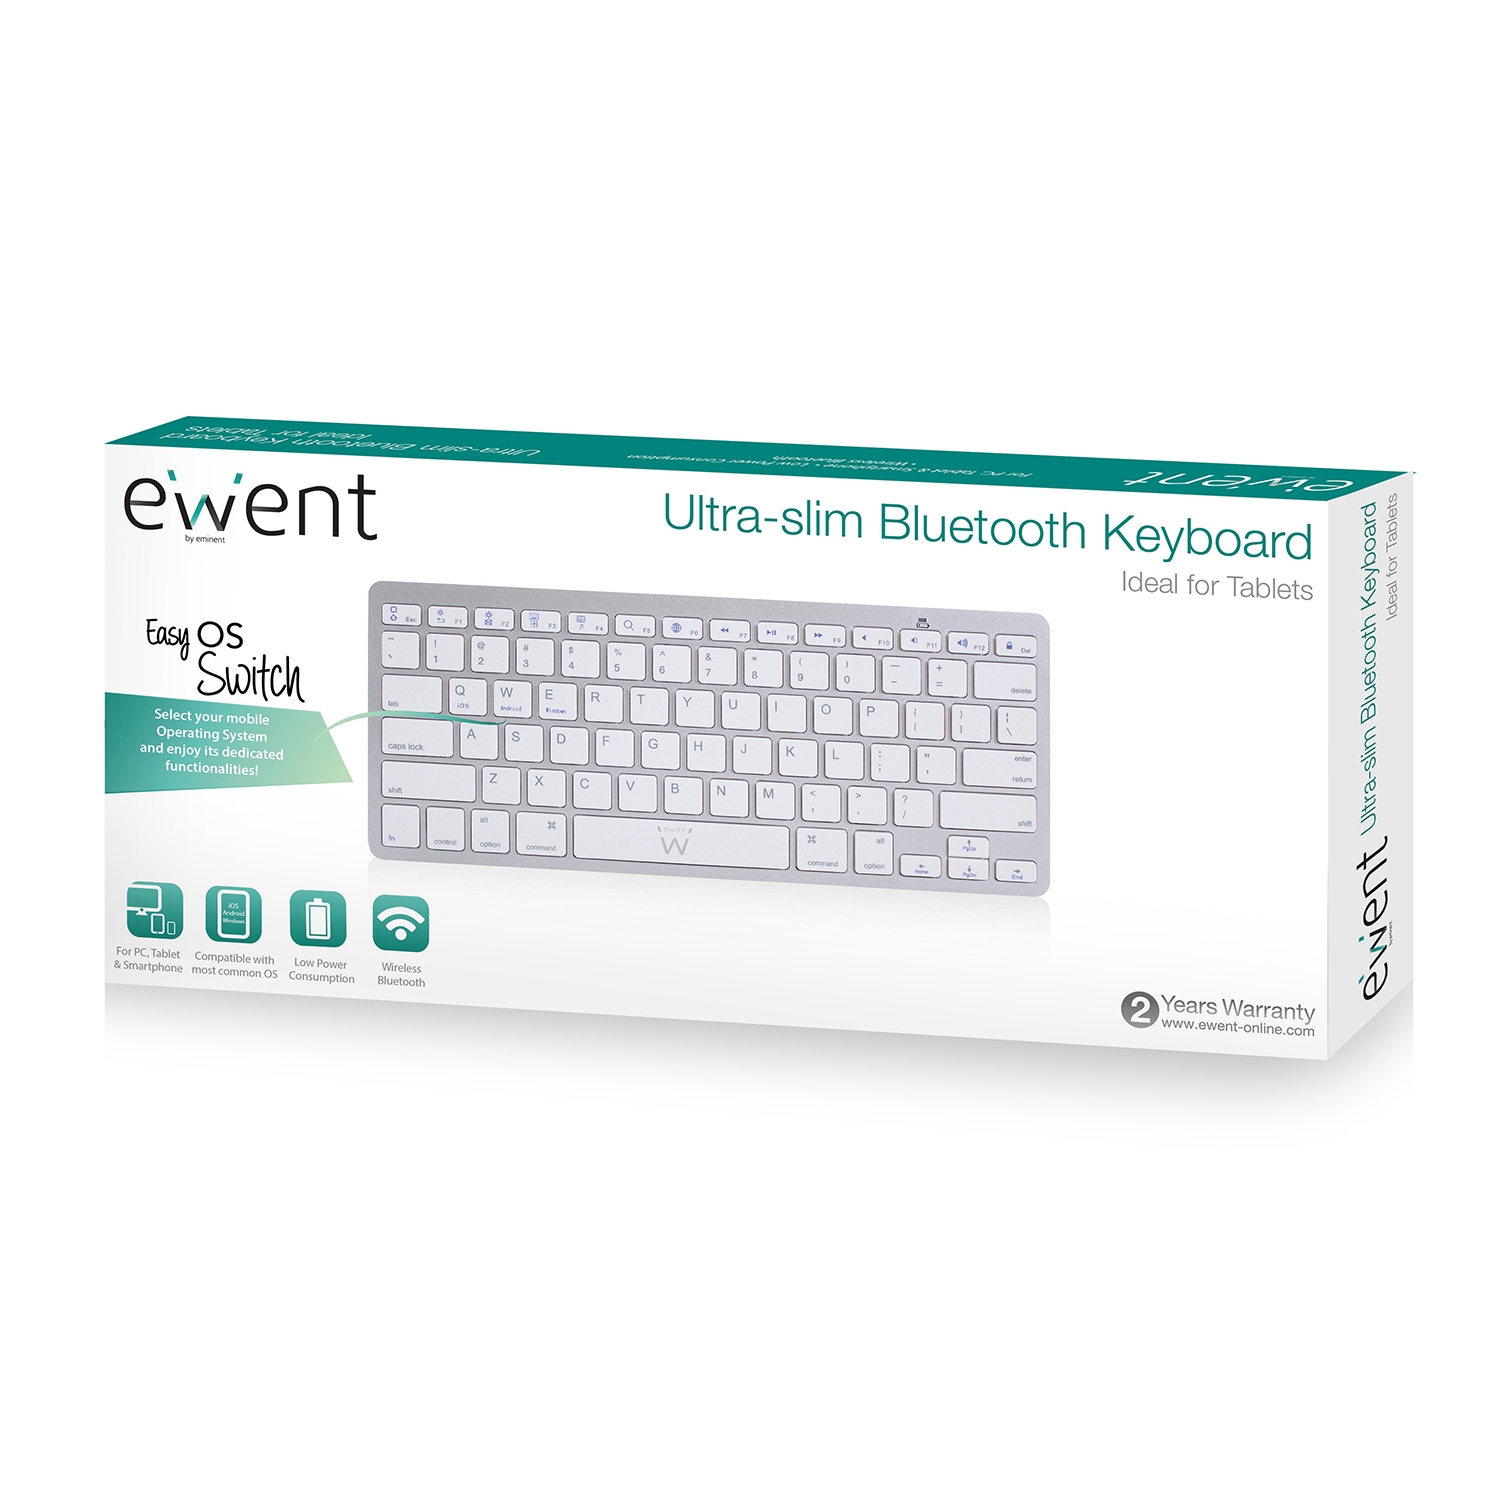 avond weigeren Intact Ultra-slim Bluetooth Keyboard - IT layout (QWERTY) | Ewent Eminent